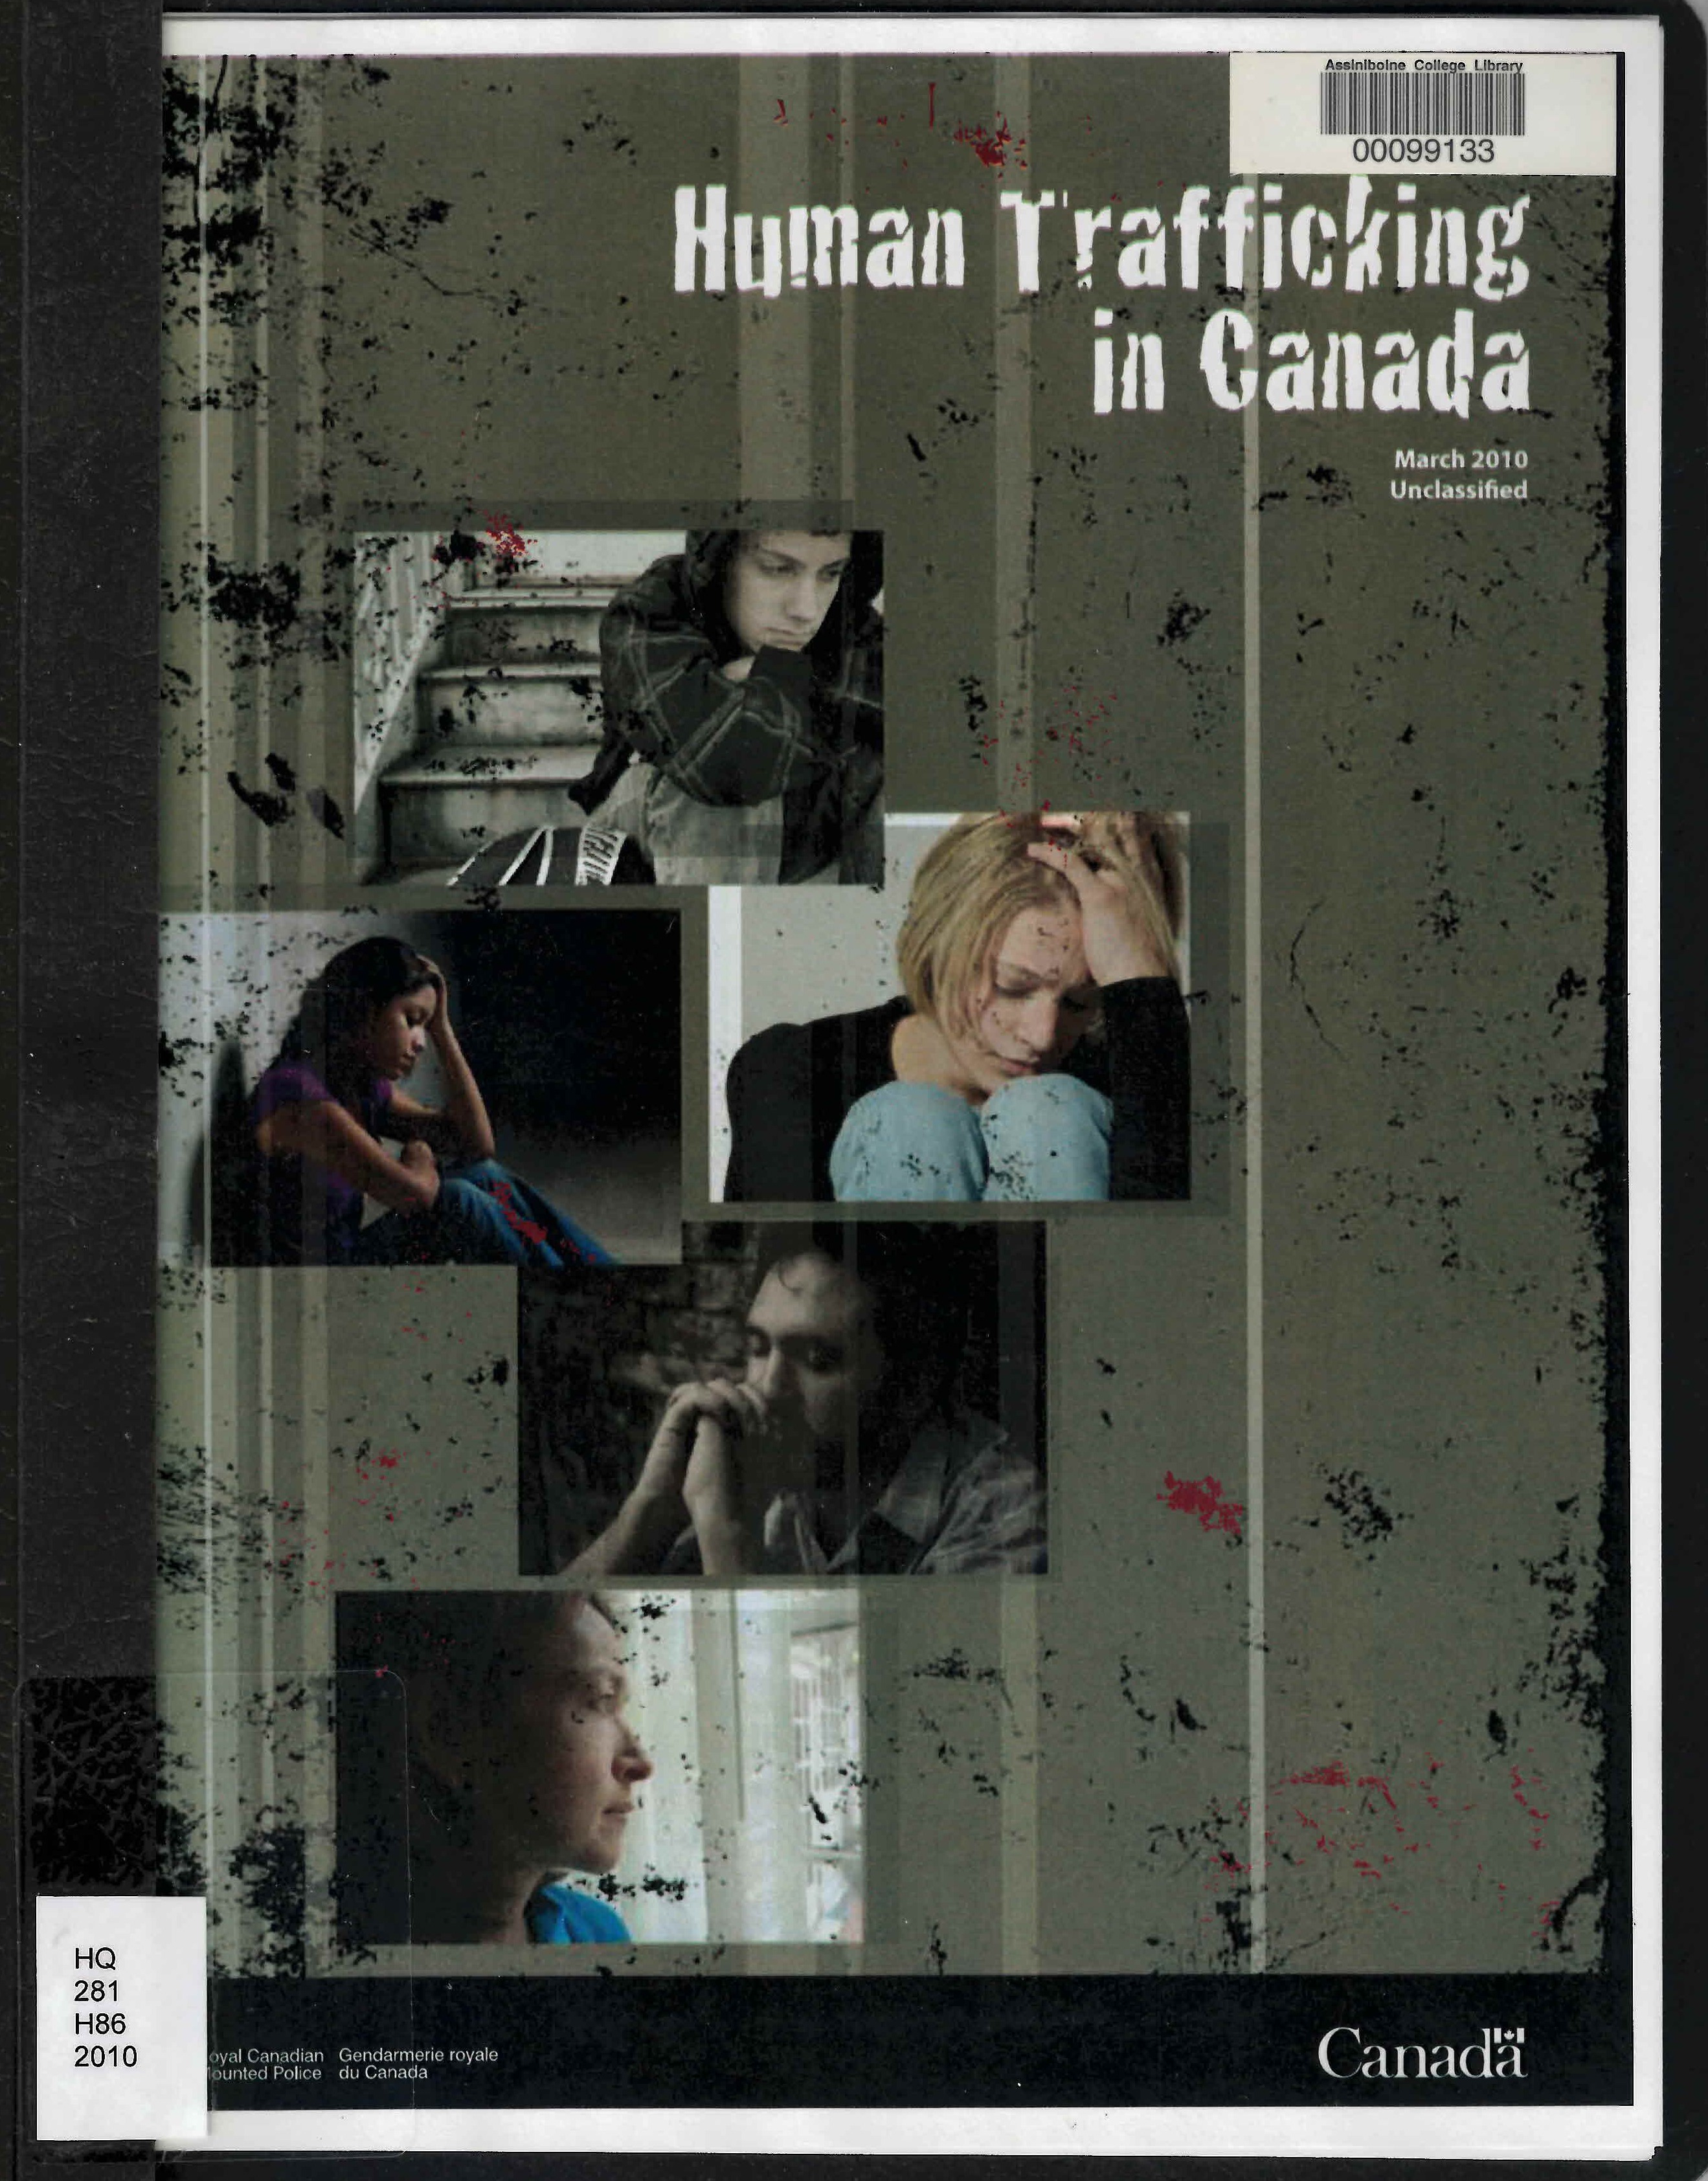 Human trafficking in Canada